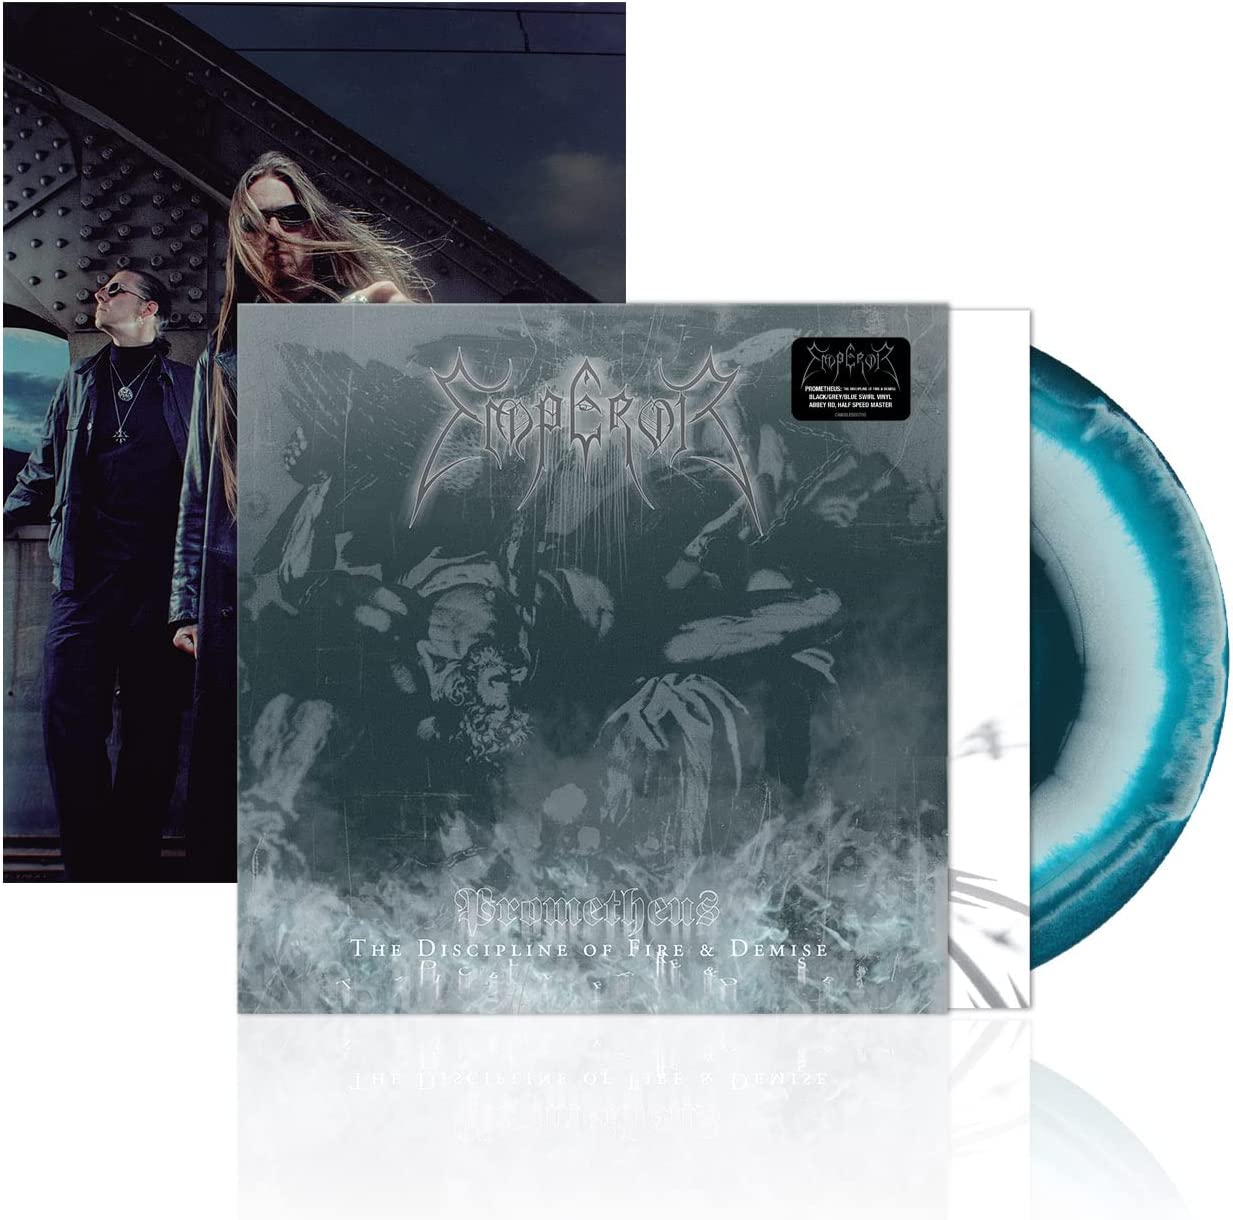 Prometheus: The Discipline Of Fire & Demise (Black/Grey/Blue Swirl Vinyl) | Emperor image7